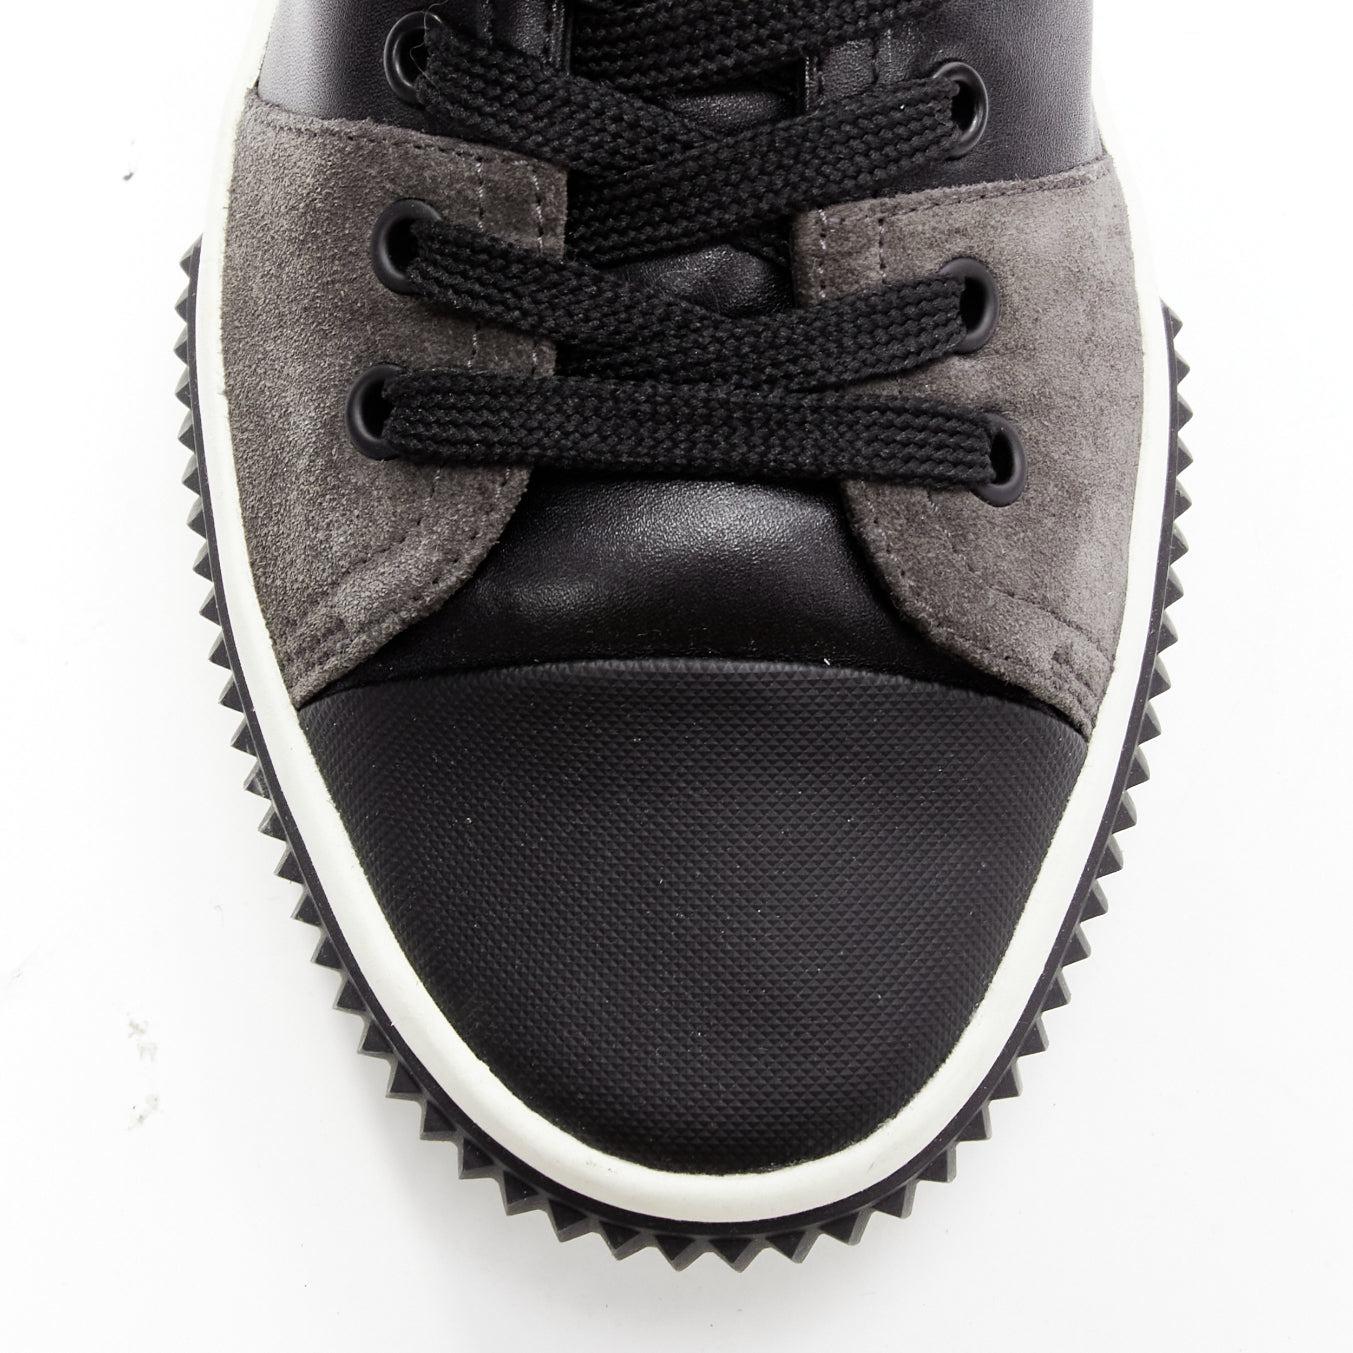 PRADA Stratus black grey suede leather low top sneakers UK5.5 EU39.5 For Sale 1